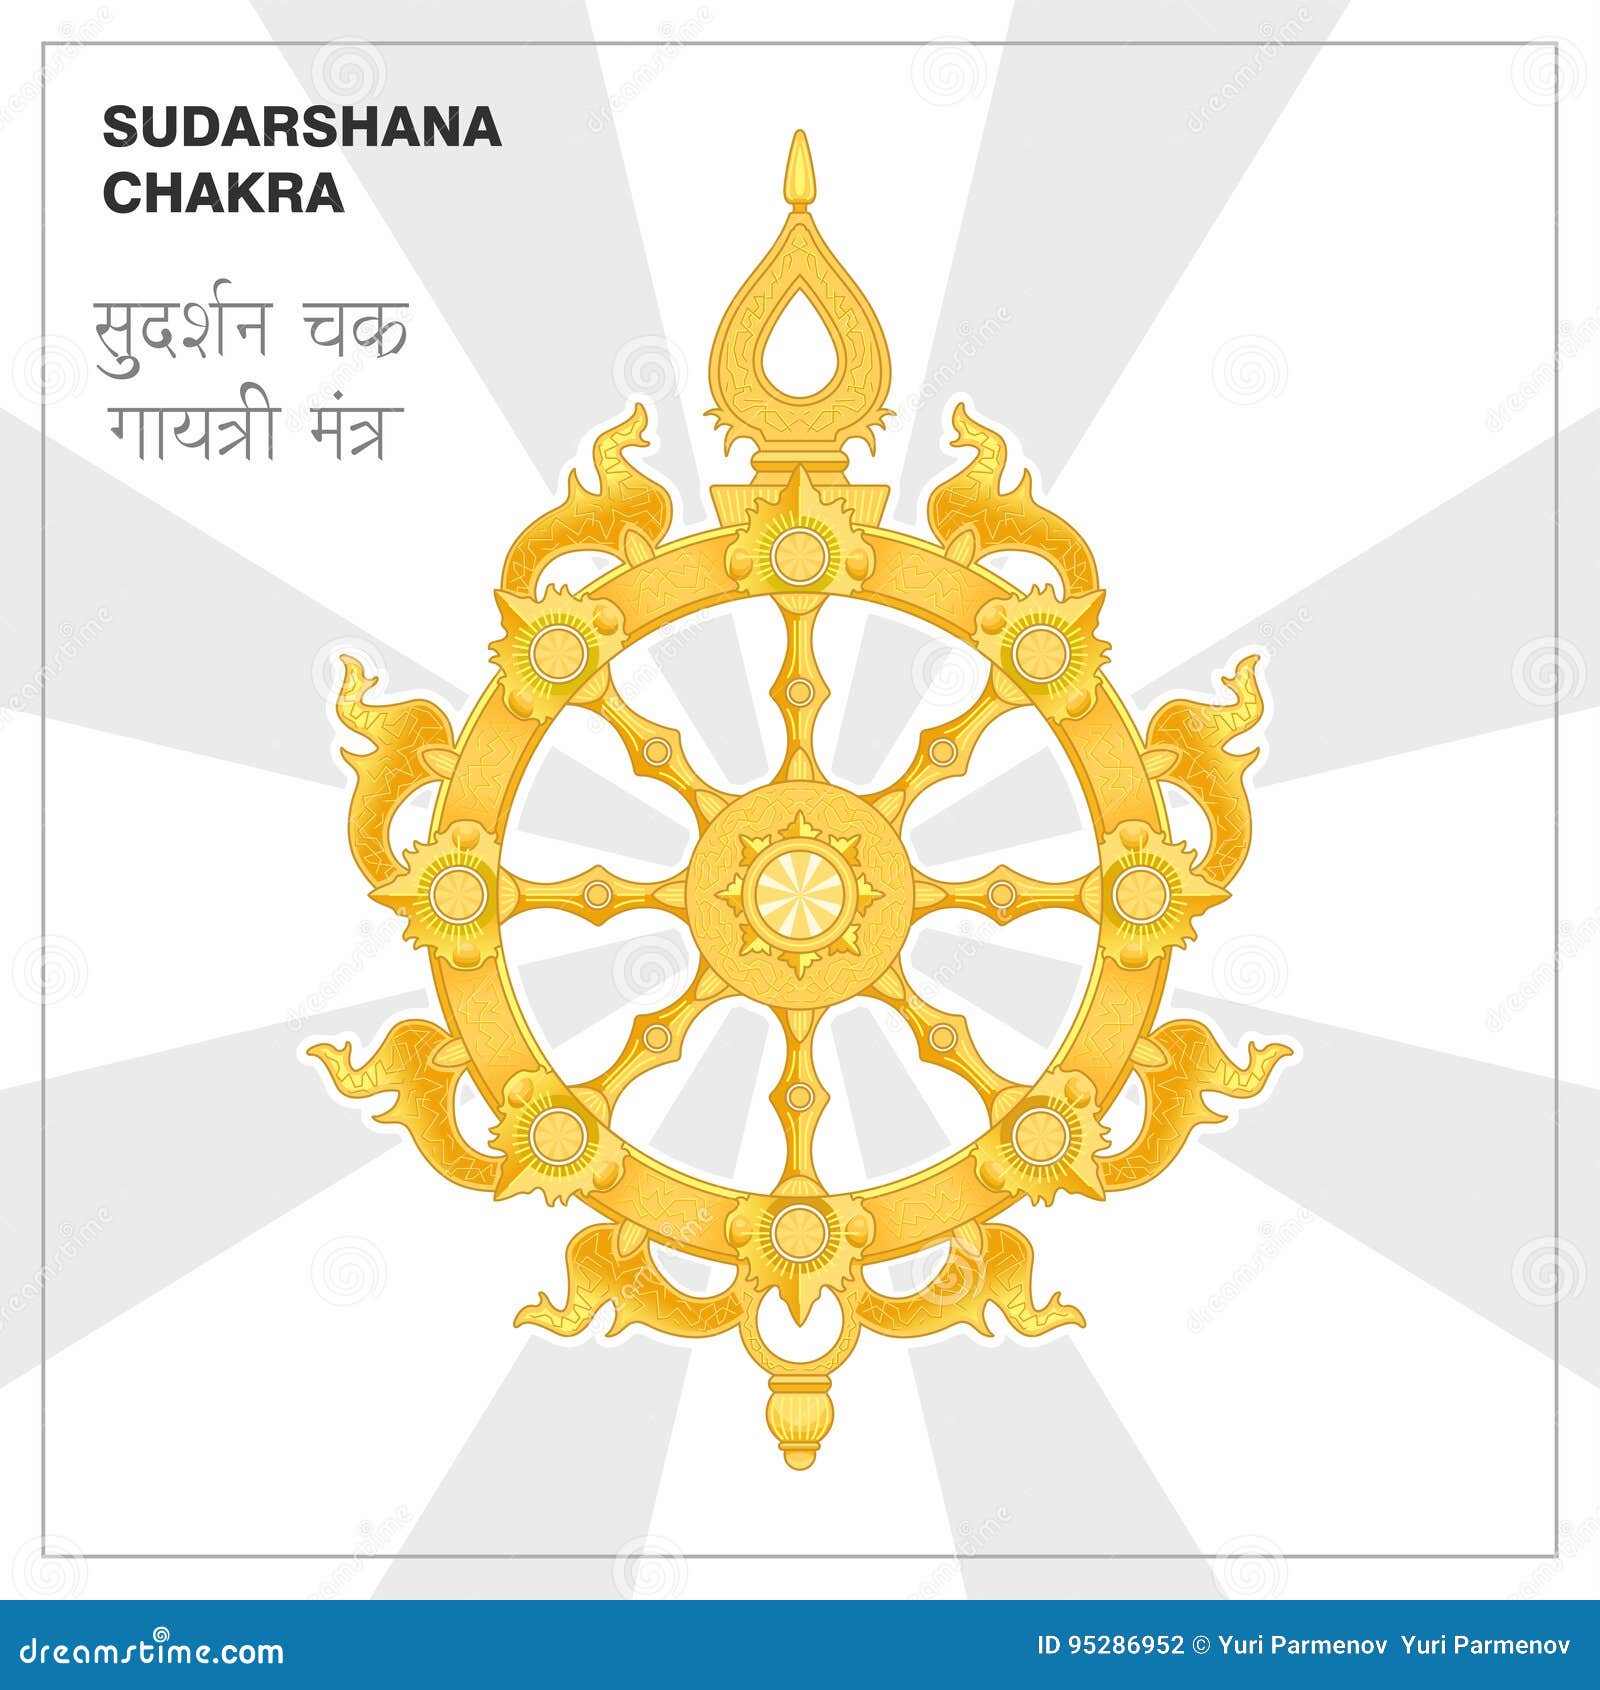 sudarshana chakra fiery disc attribute weapon lord krishna religious symbol hinduism vector illustration 95286952